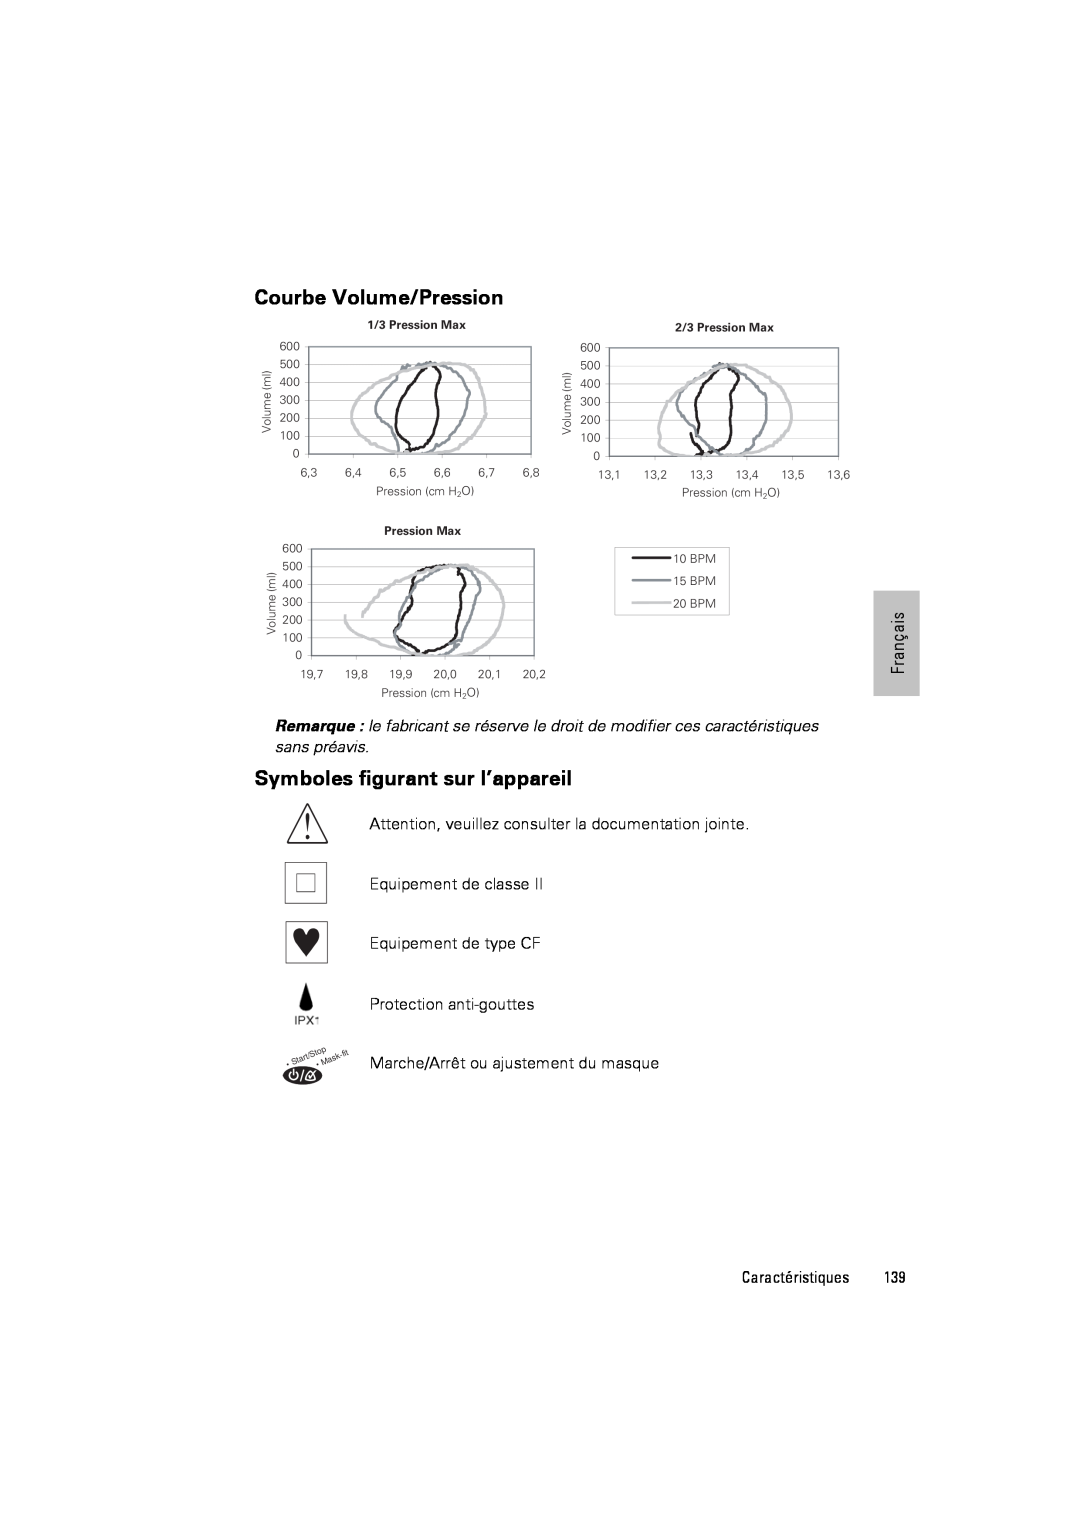 ResMed III & III ST Courbe Volume/Pression, Symboles figurant sur l’appareil, Equipement de classe Equipement de type CF 